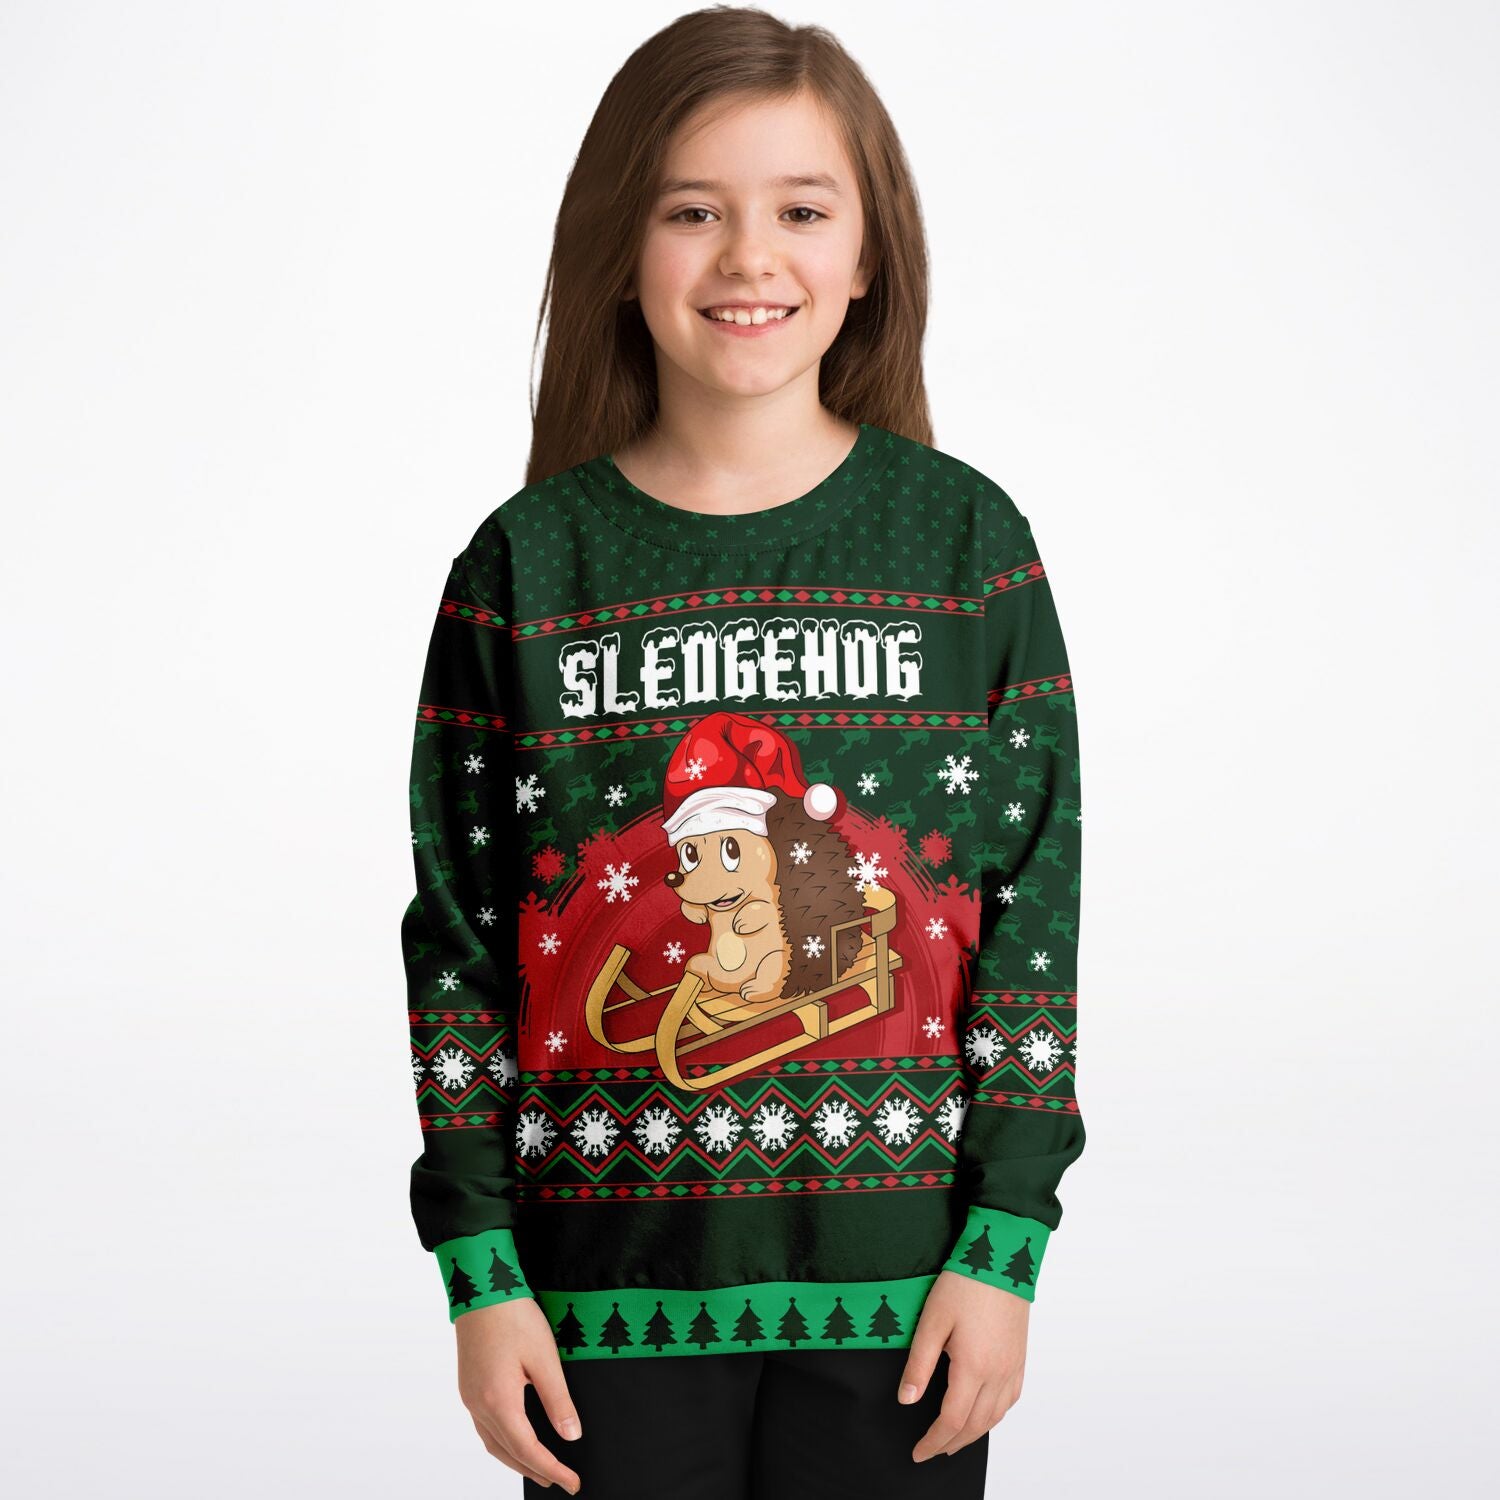 Sledge-hog Fashion Kids/Youth Sweatshirt